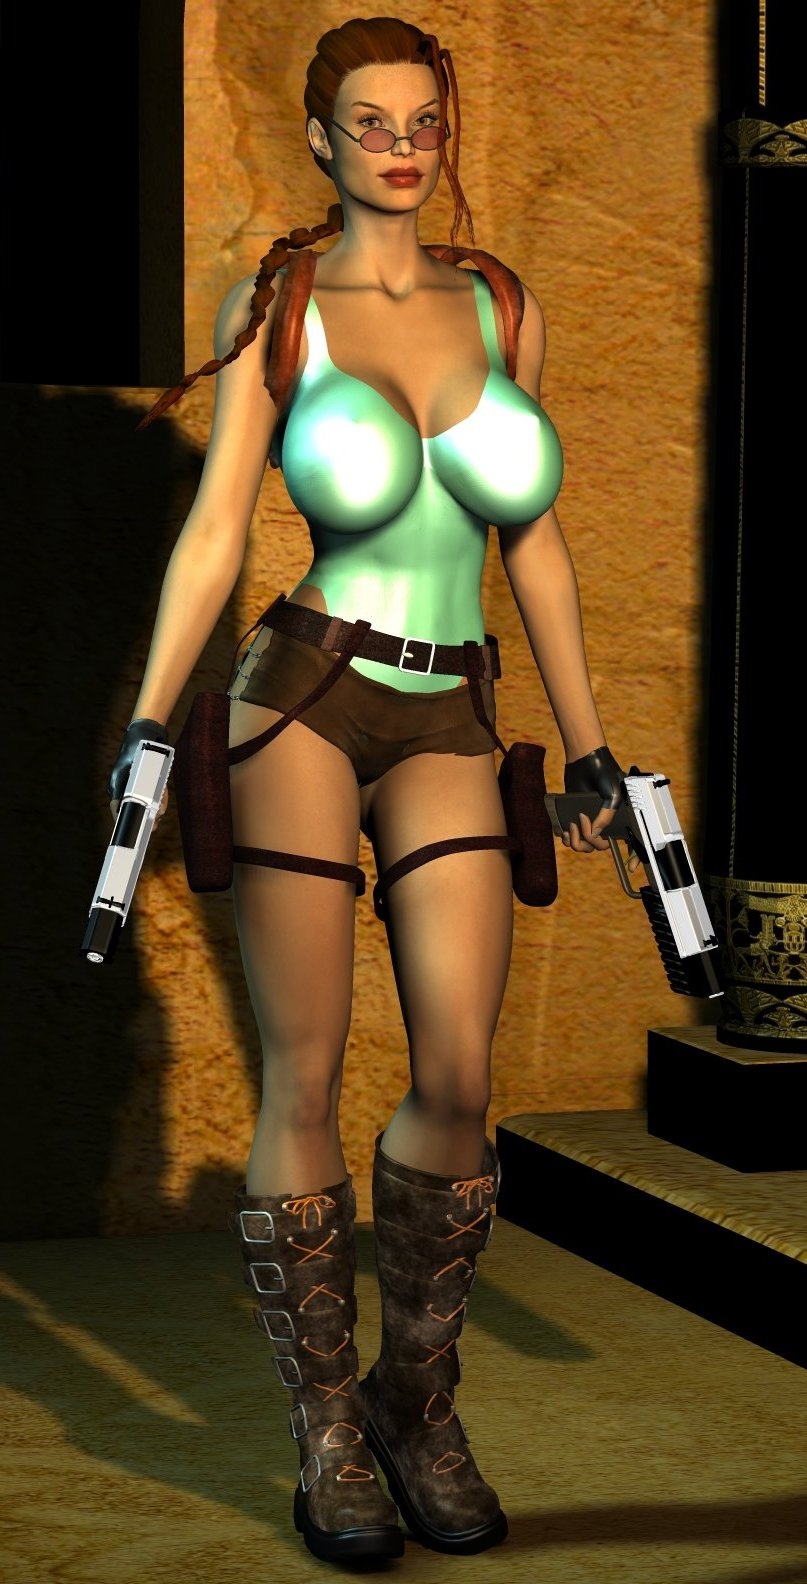 CleonXXI / Ricklinkous - Lara Croft 3D pics collection 118